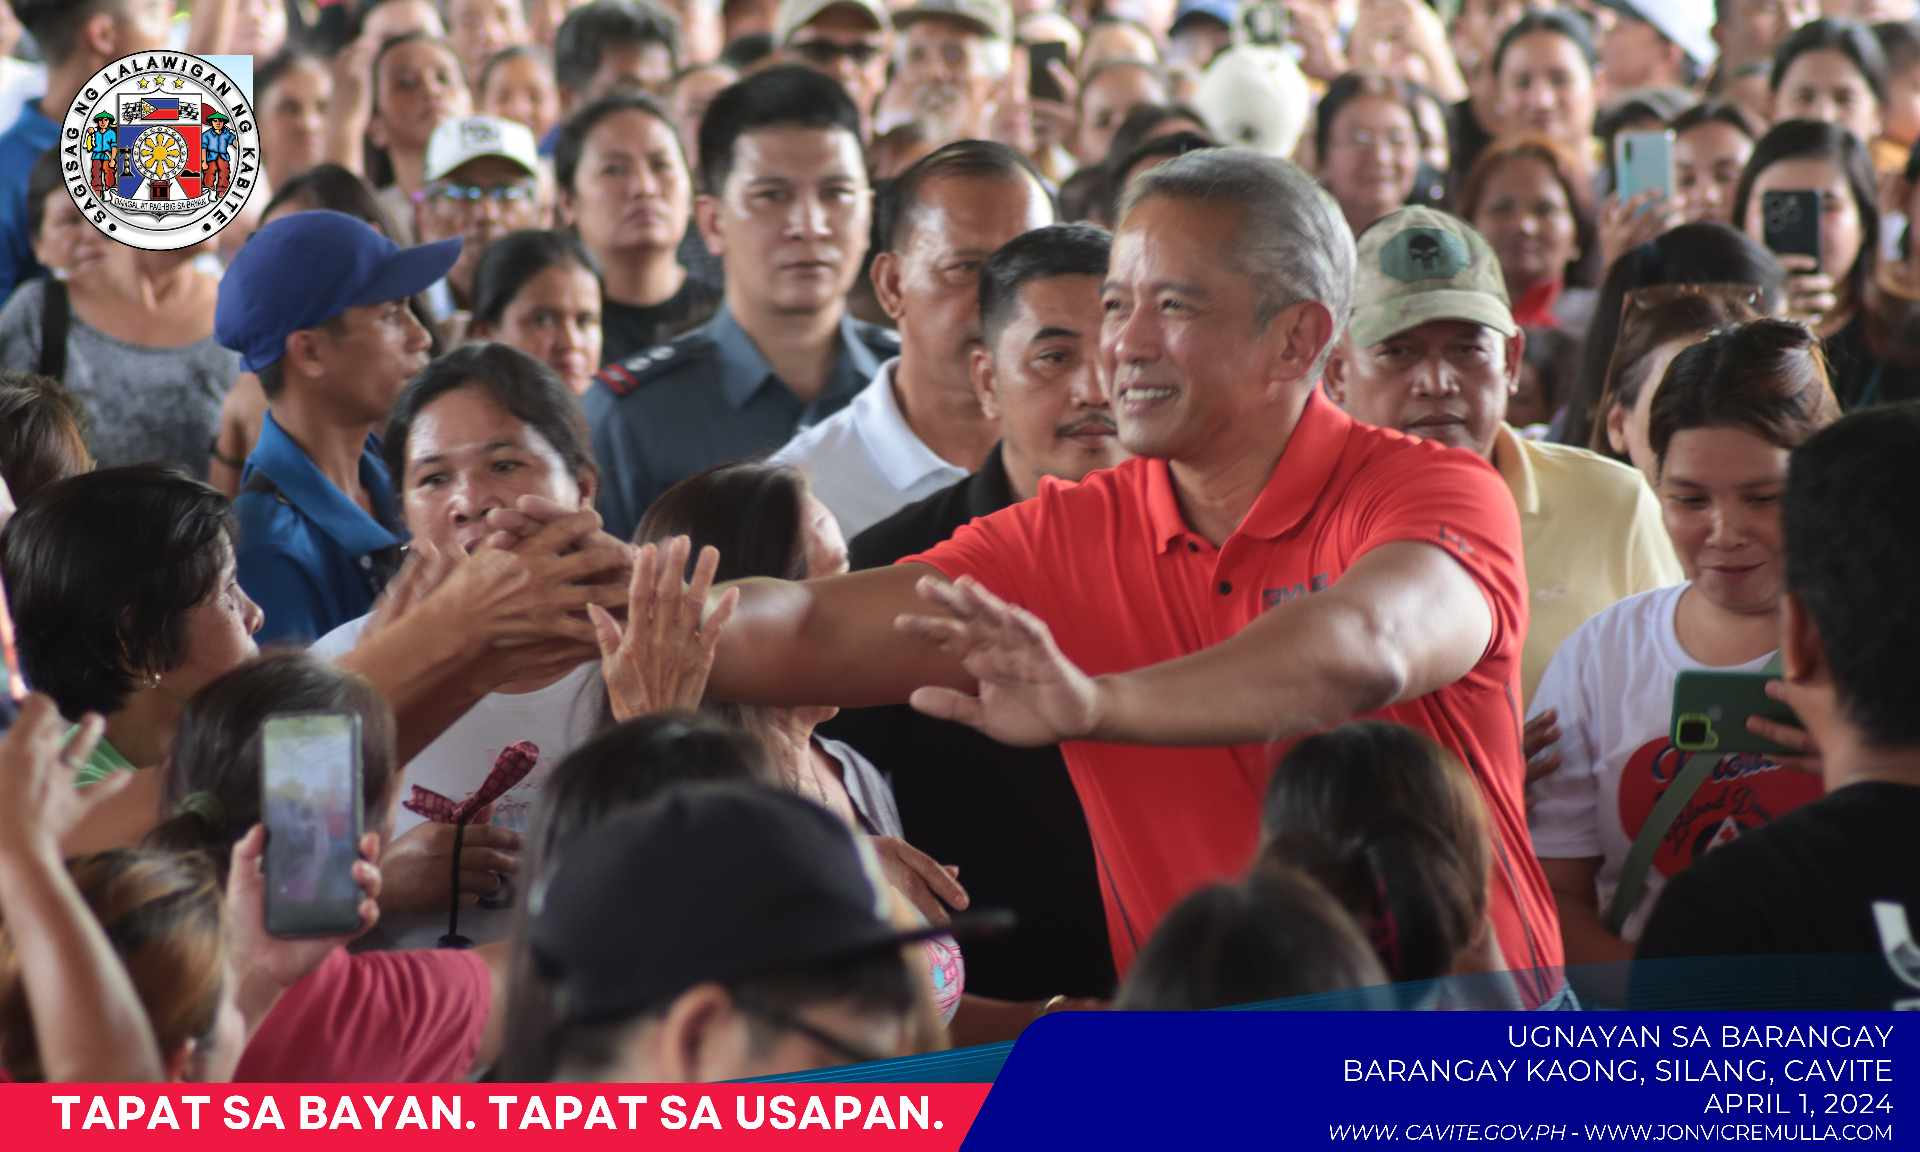 PGC’s Ugnayan sa Barangay program brings hope and cheer to Cavite communities.